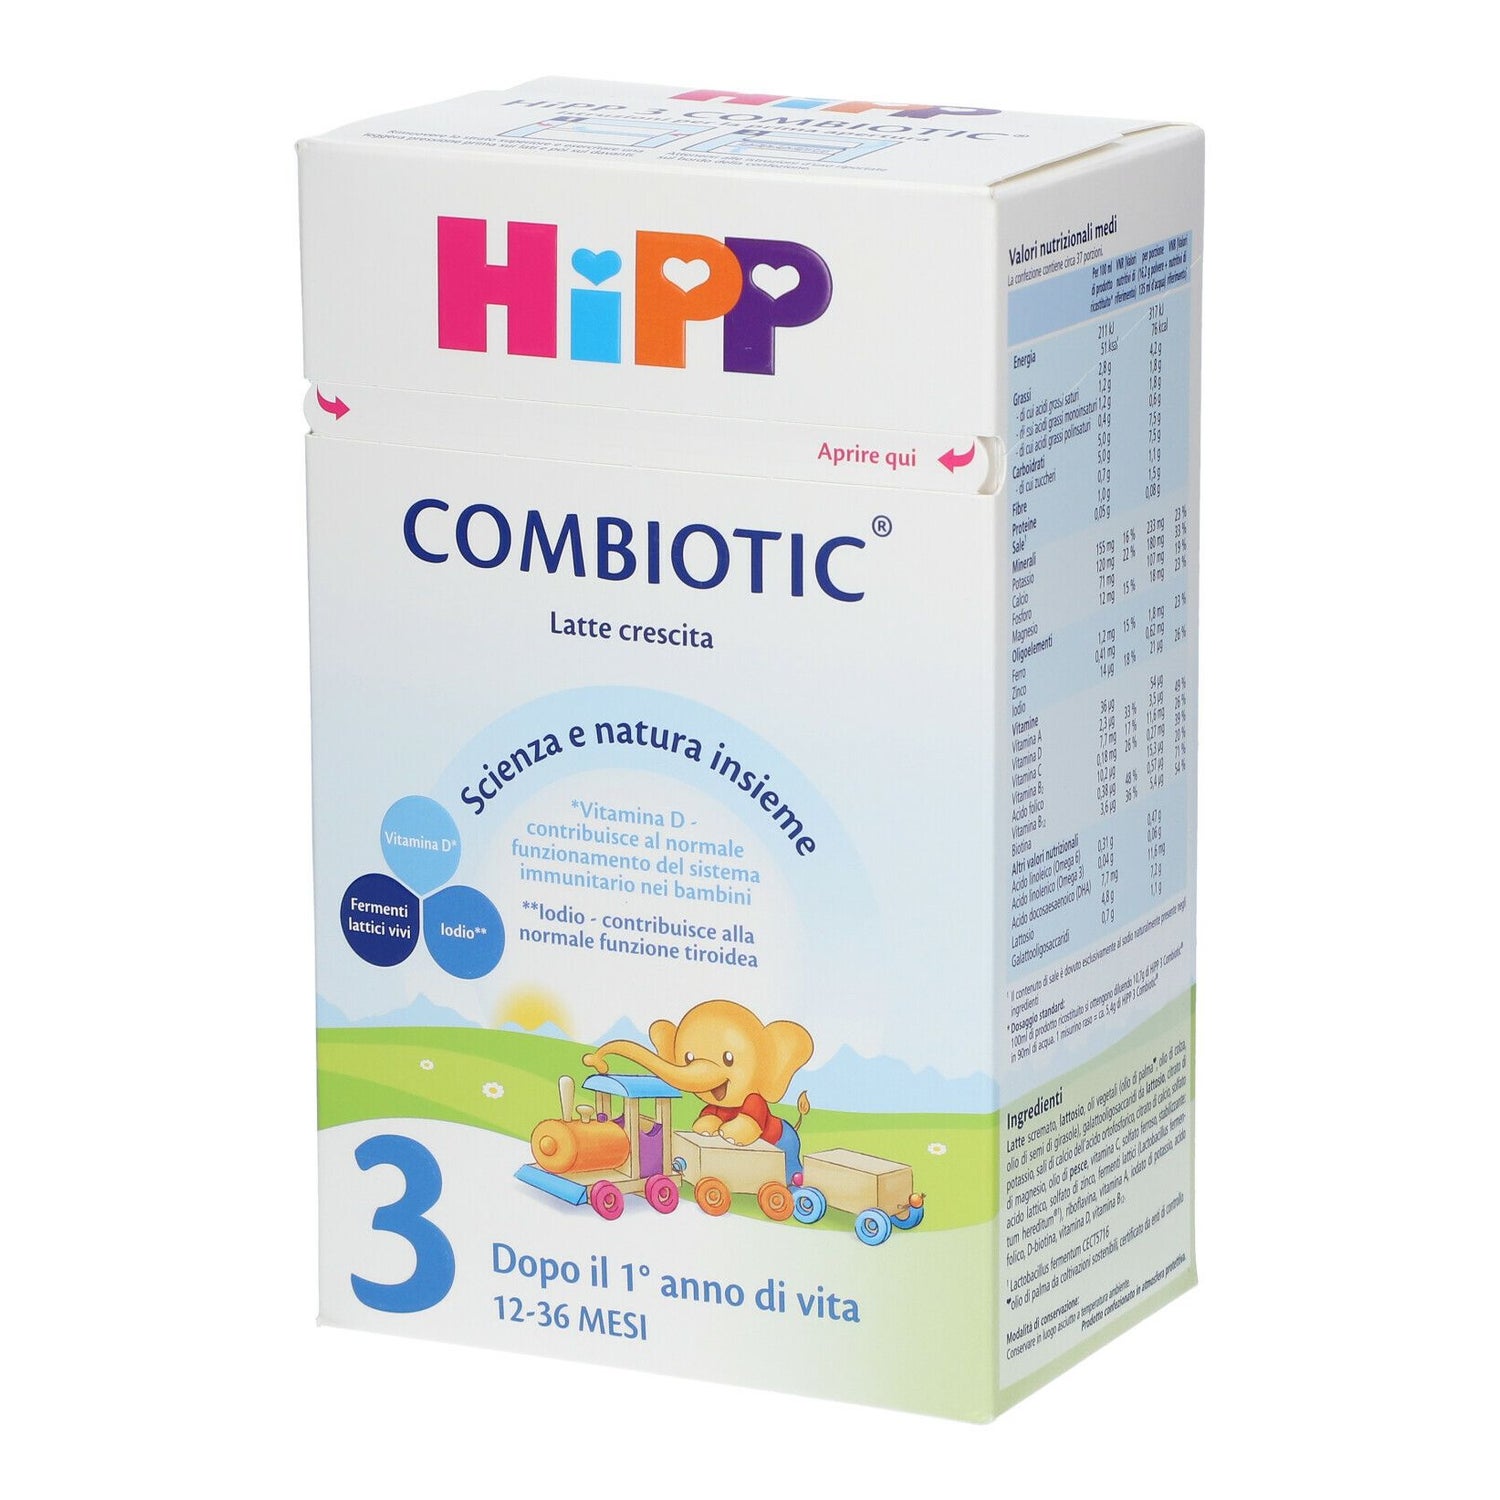 Achat HiPP 3 bio combiotik 600 g en ligne